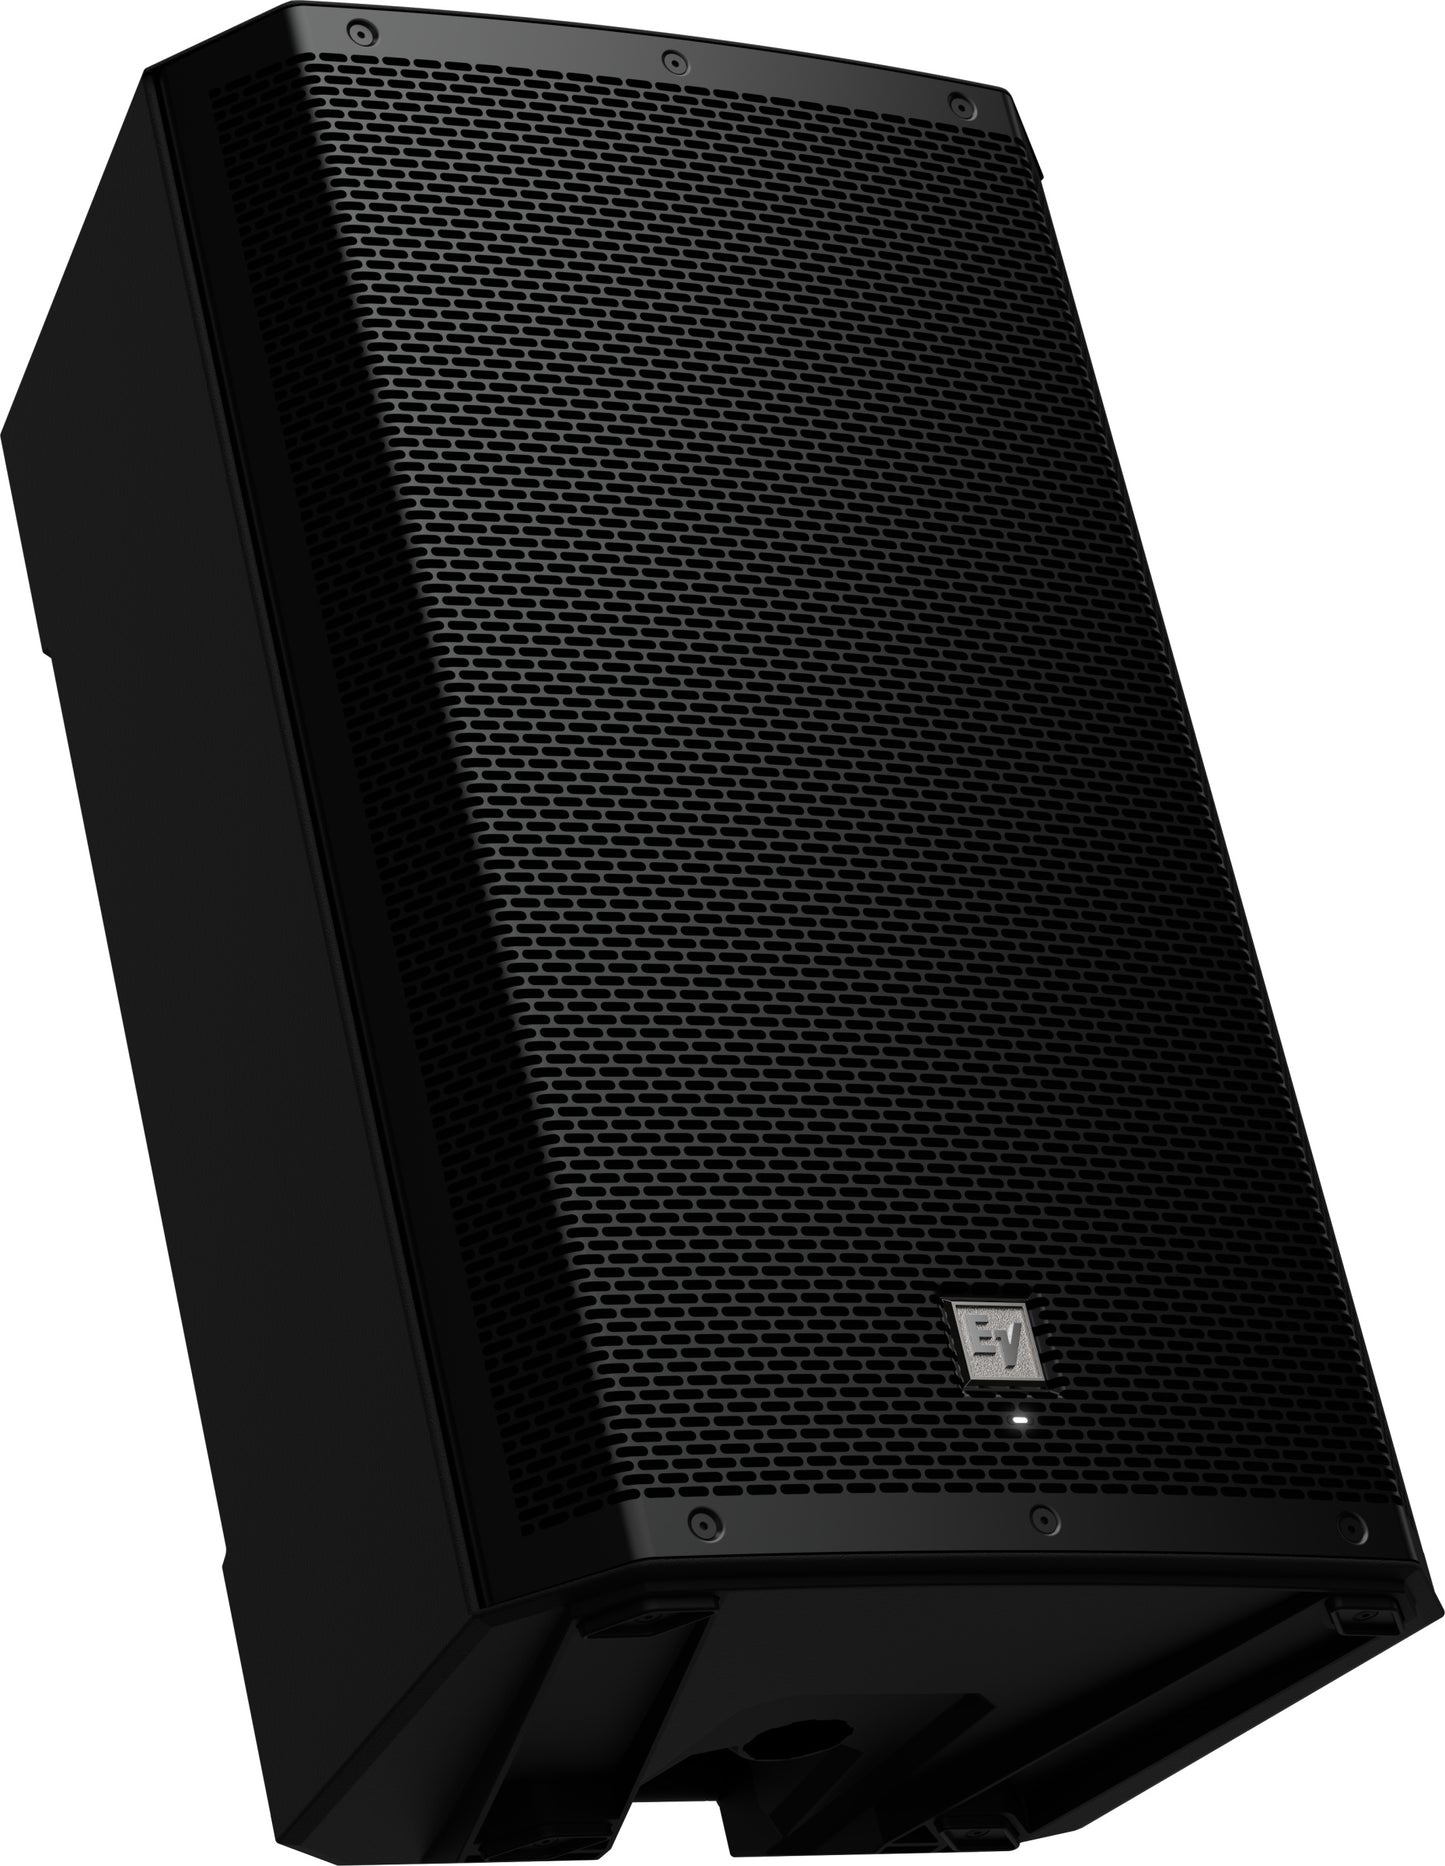 Electro Voice ZLX-15P-G2 15" 2-way Powered Speaker